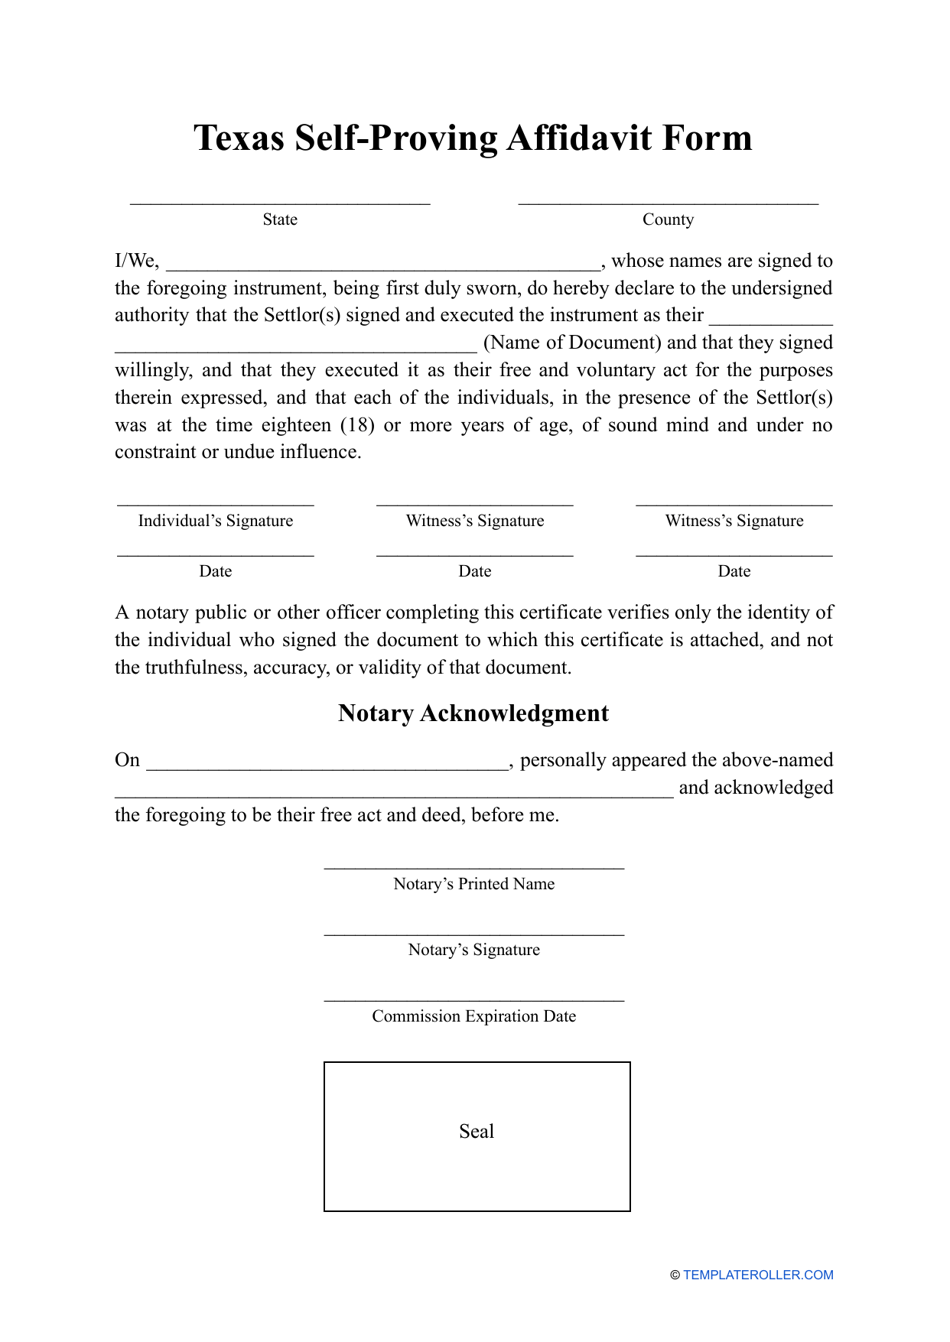 Self-proving Affidavit Form - Texas, Page 1